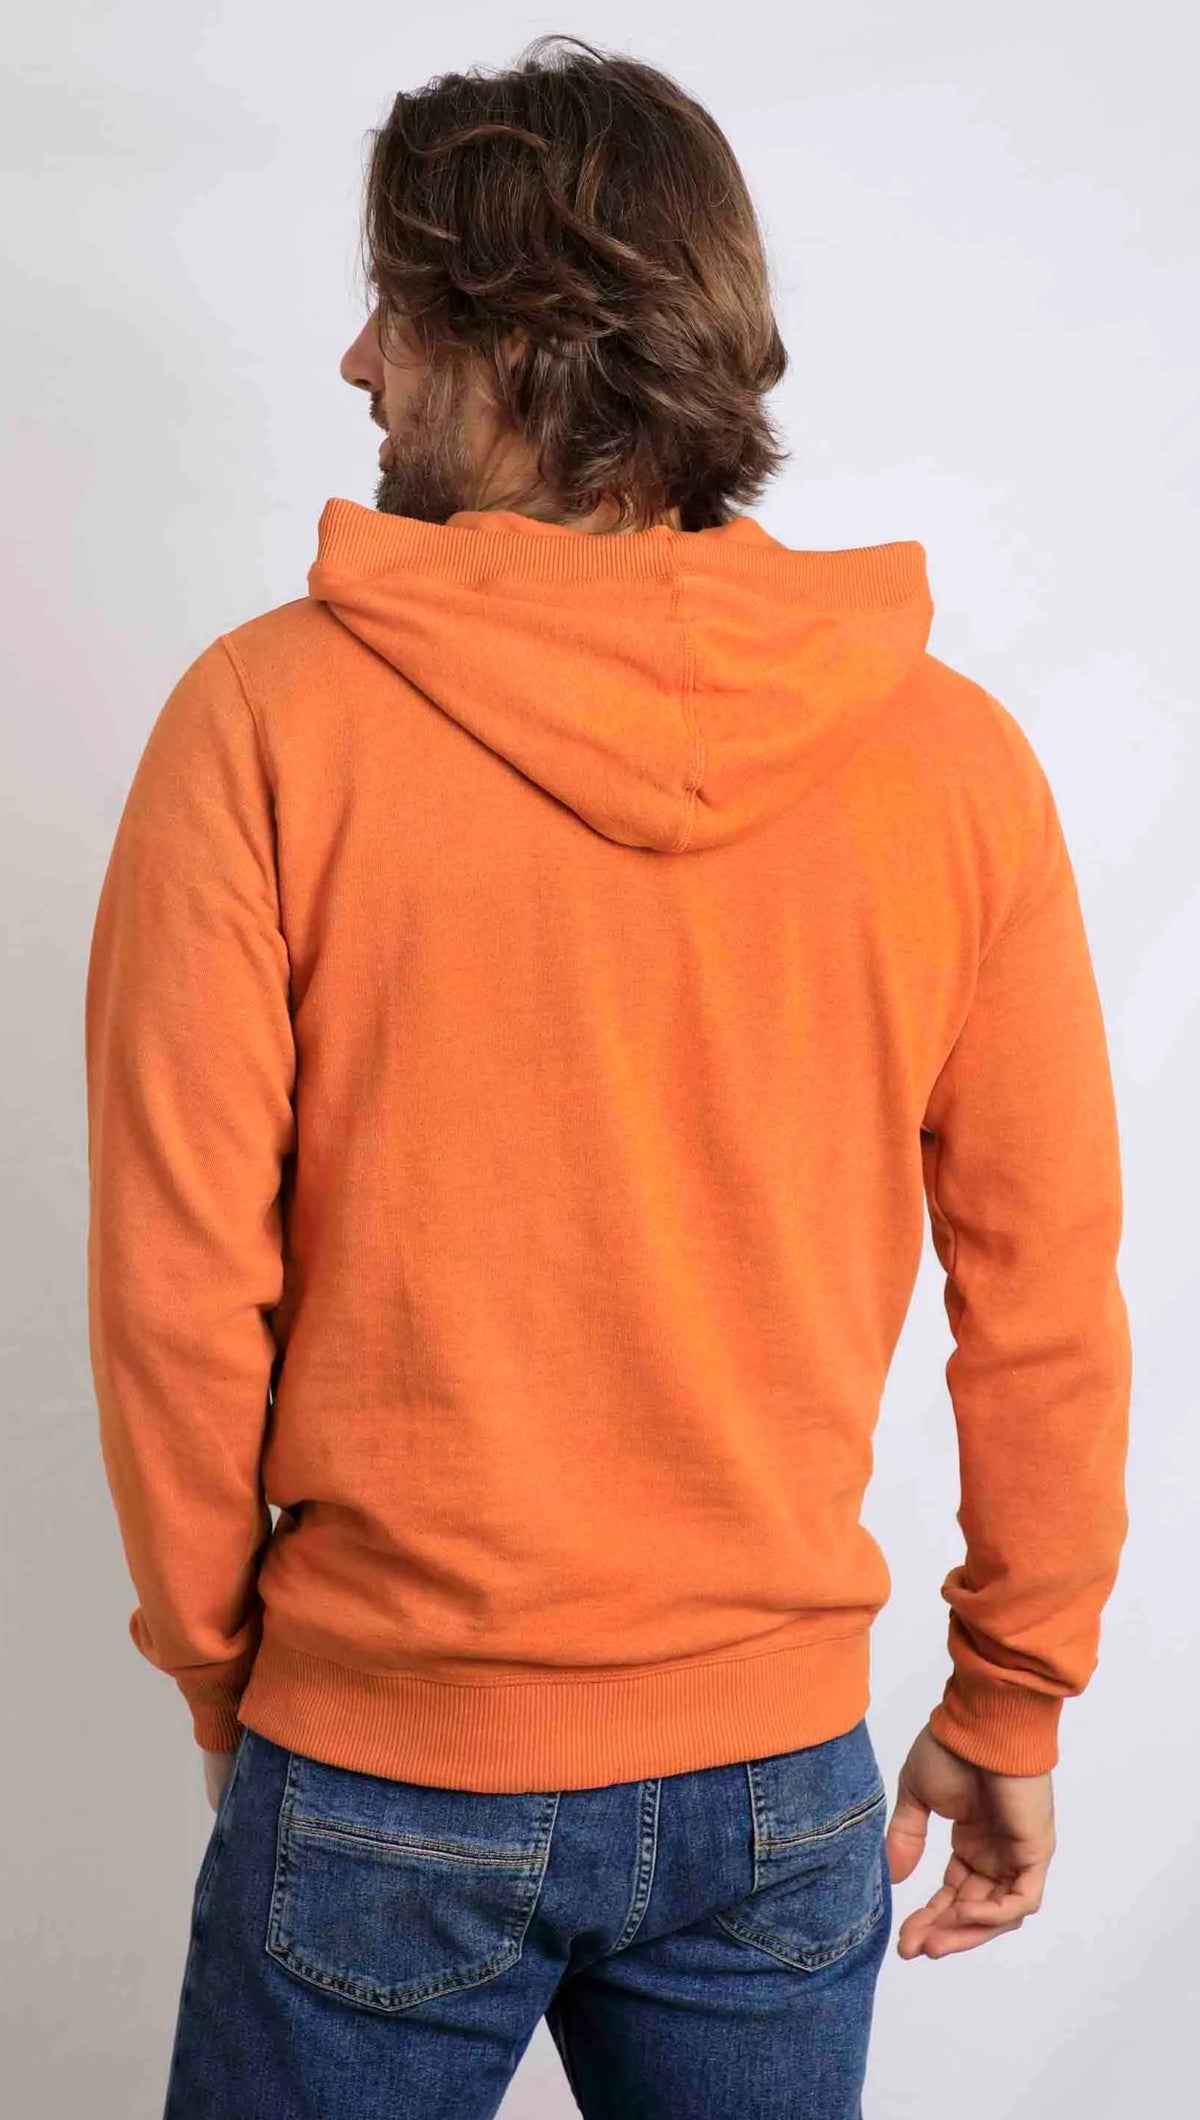 Men's hooded pop over Bryant sweatshirt from Weird Fish in Brick Orange.